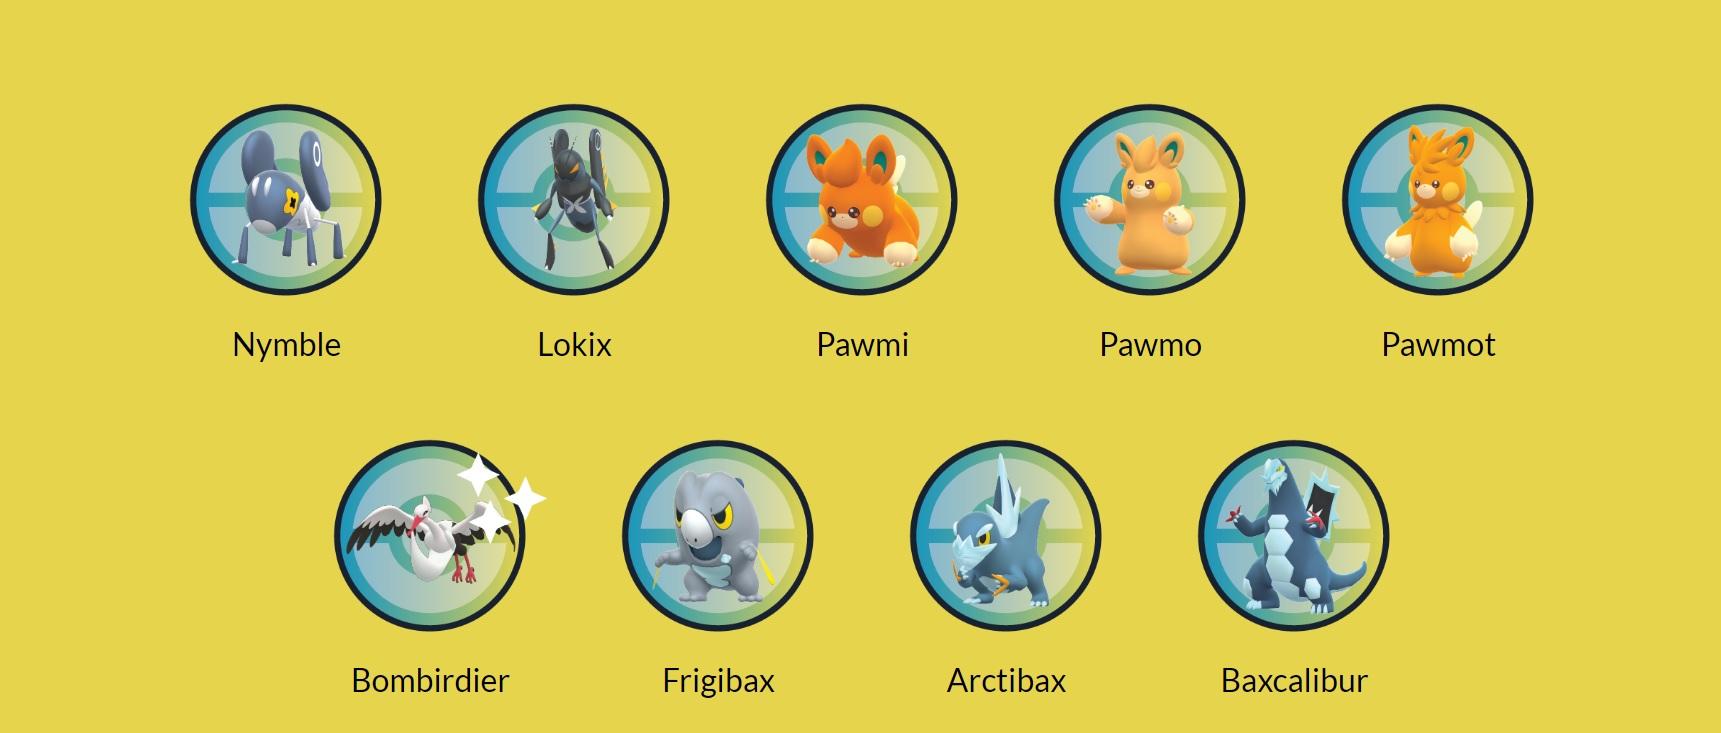 Pawmi, Pawmo, Pawmot를 포함하여 Pokémon GO에서 사용할 수 있는 Gen. IX 포켓몬 목록입니다.